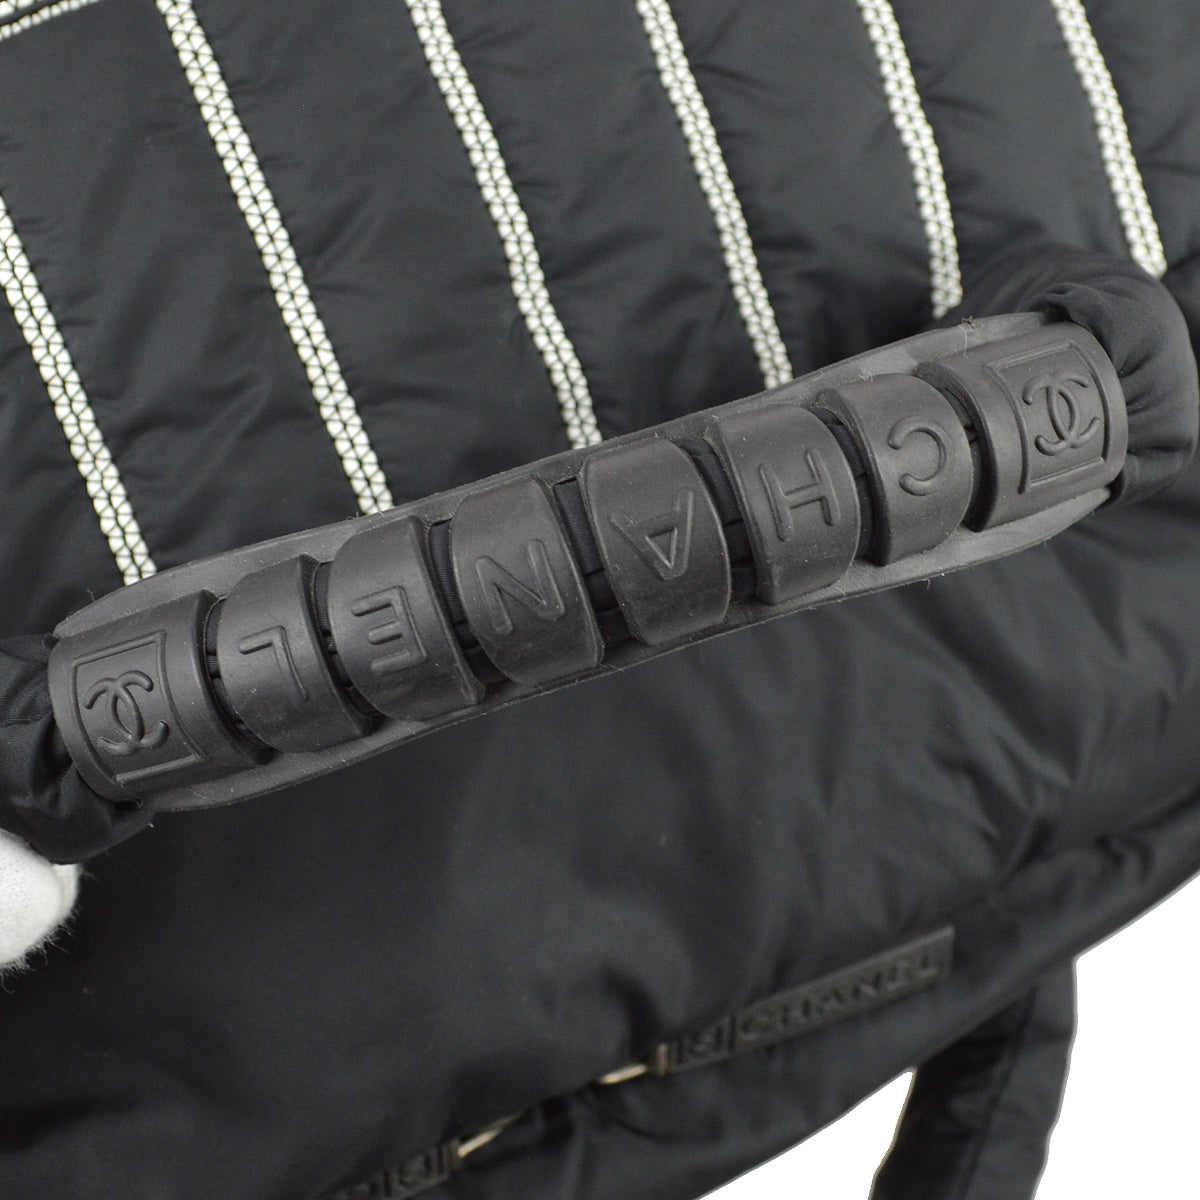 Chanel 黑色尼龍運動系列行李箱健身包